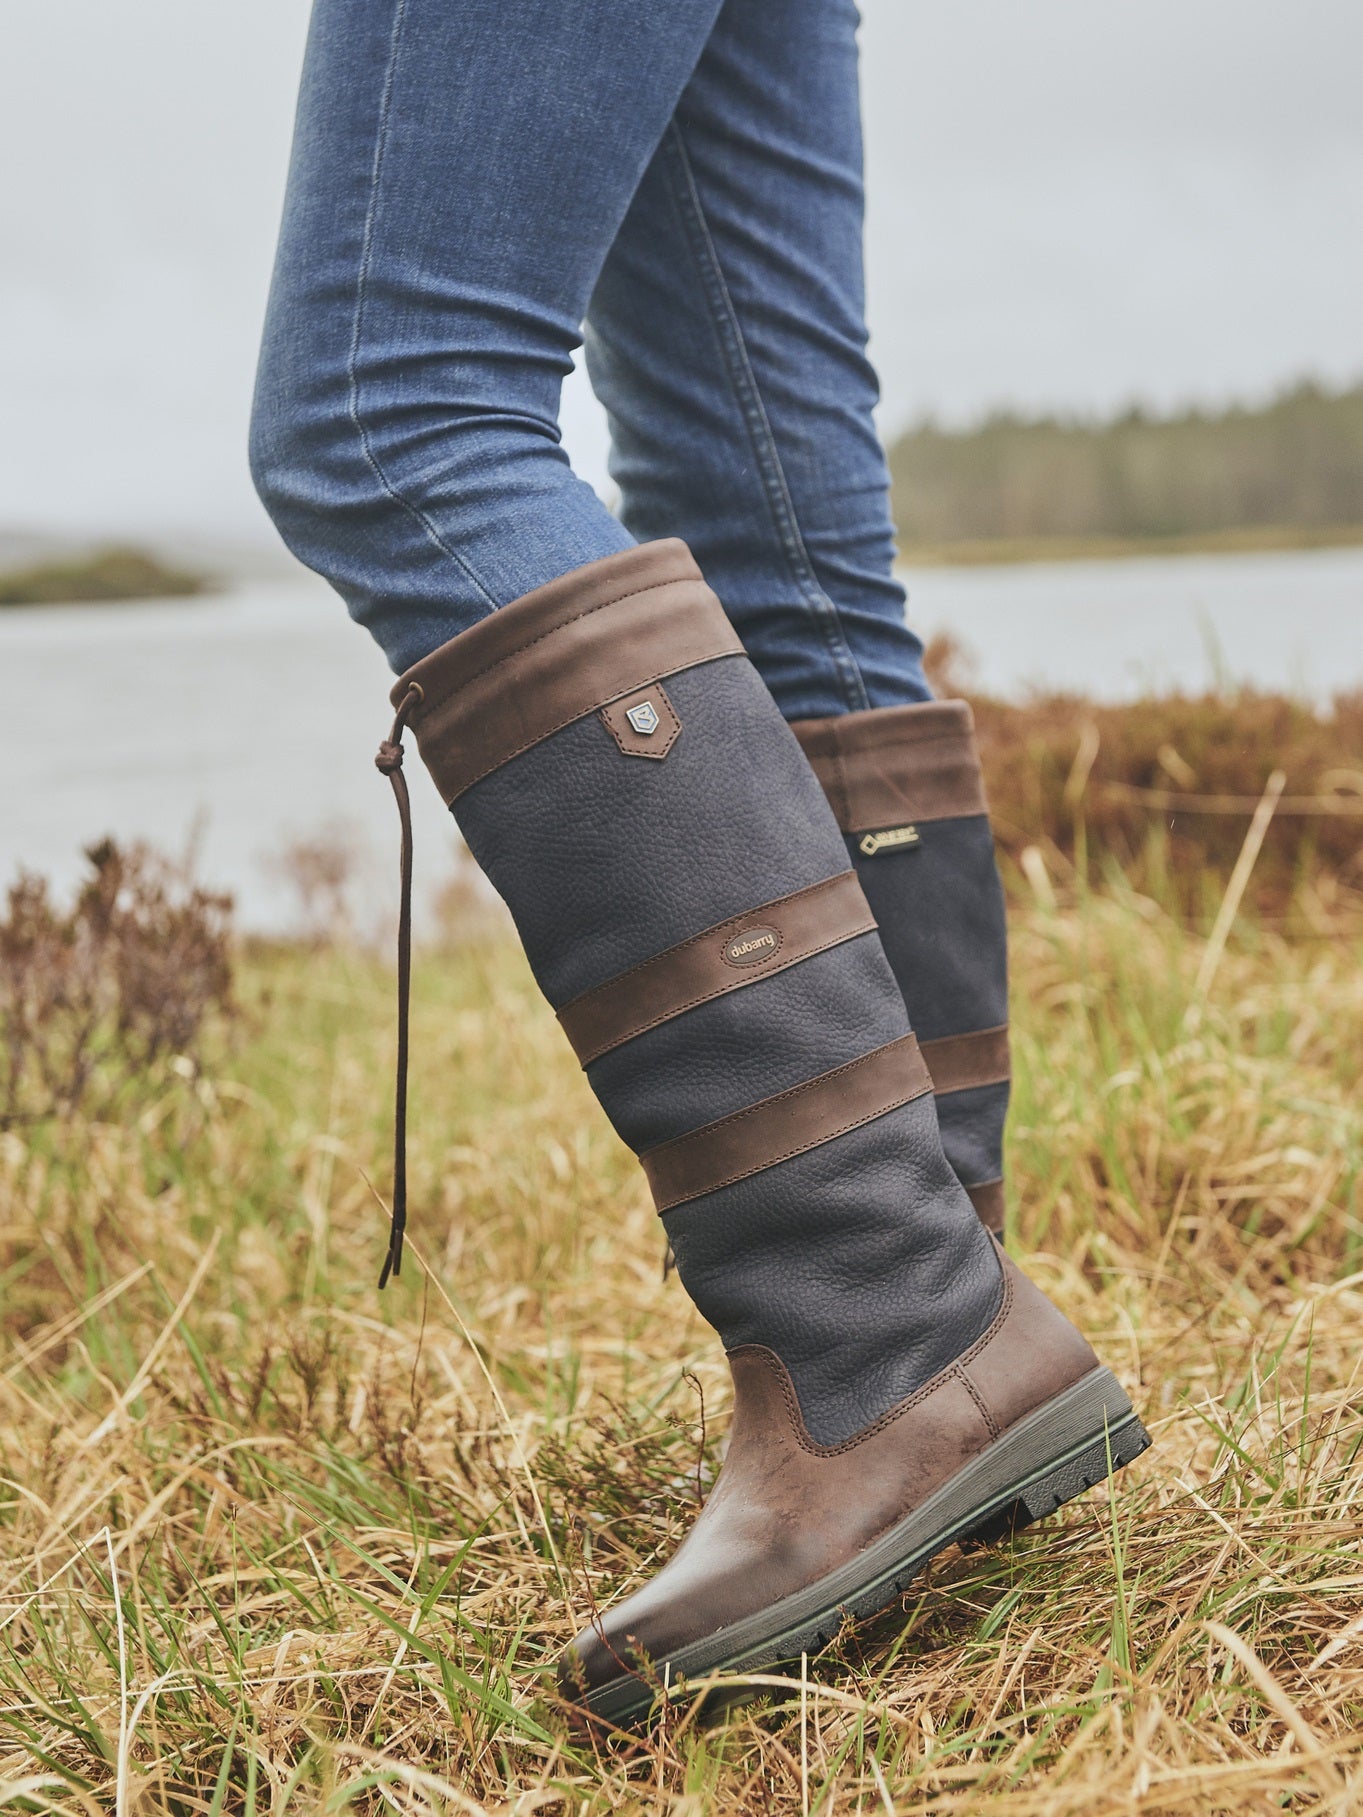 Dubarry Boots – A